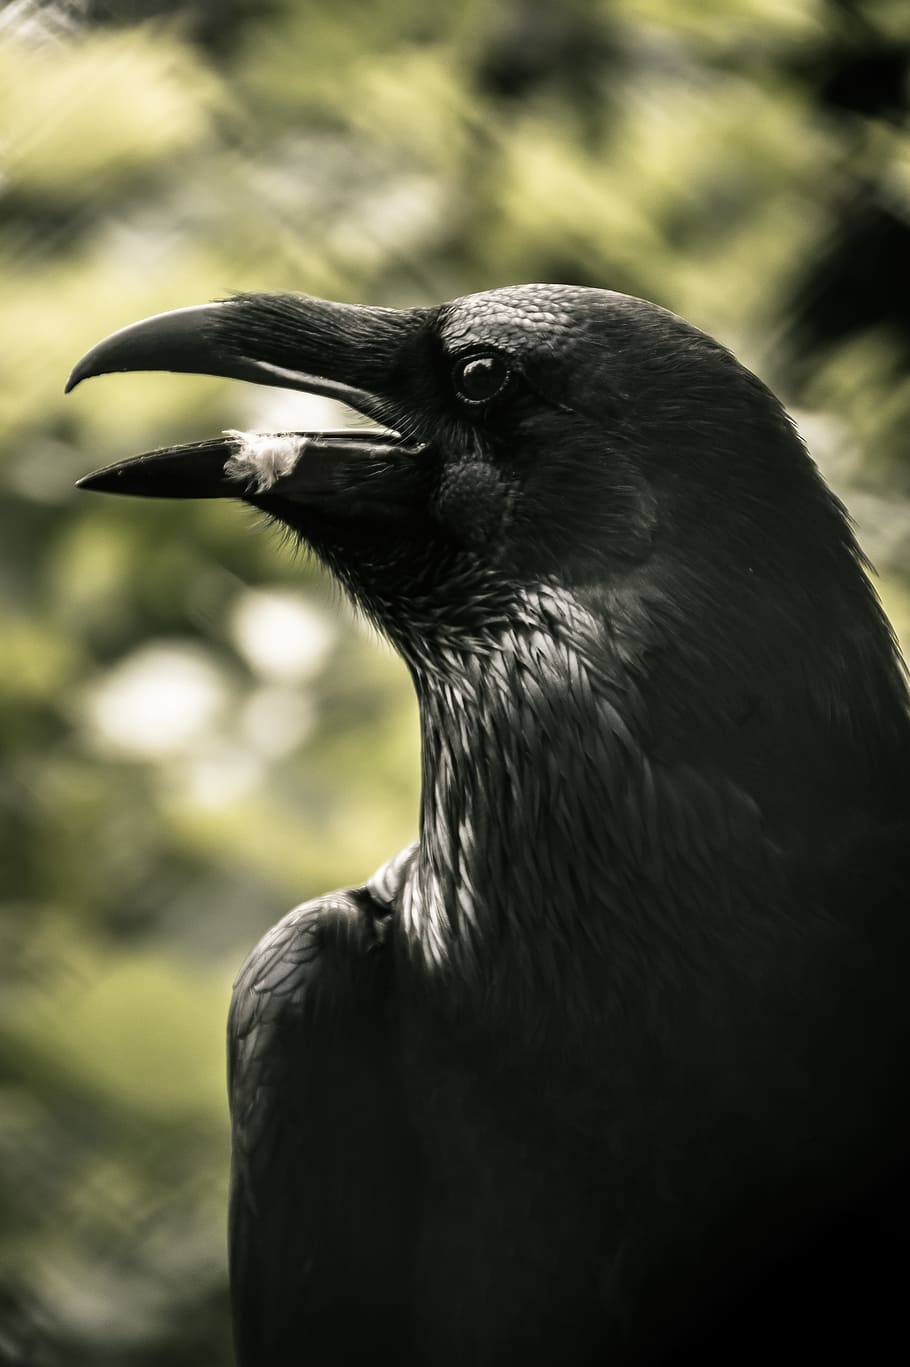 close-up photo, crow, bird, nature, animal, feathers, black, portrait, animal themes, one animal